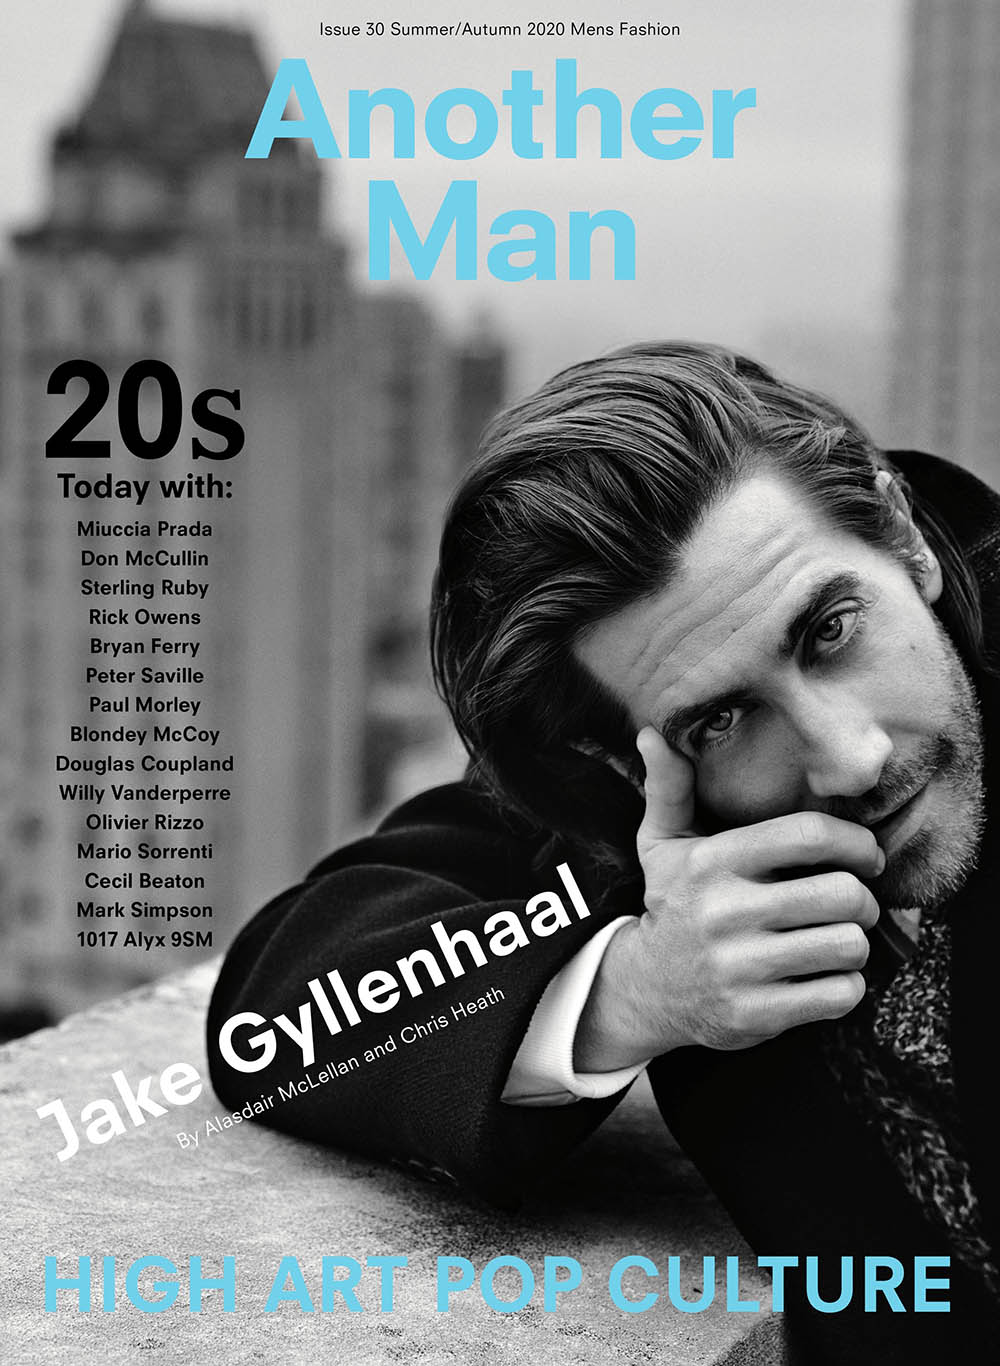 Jake Gyllenhaal covers AnOther Man Summer Autumn 2020 by Alasdair McLellan